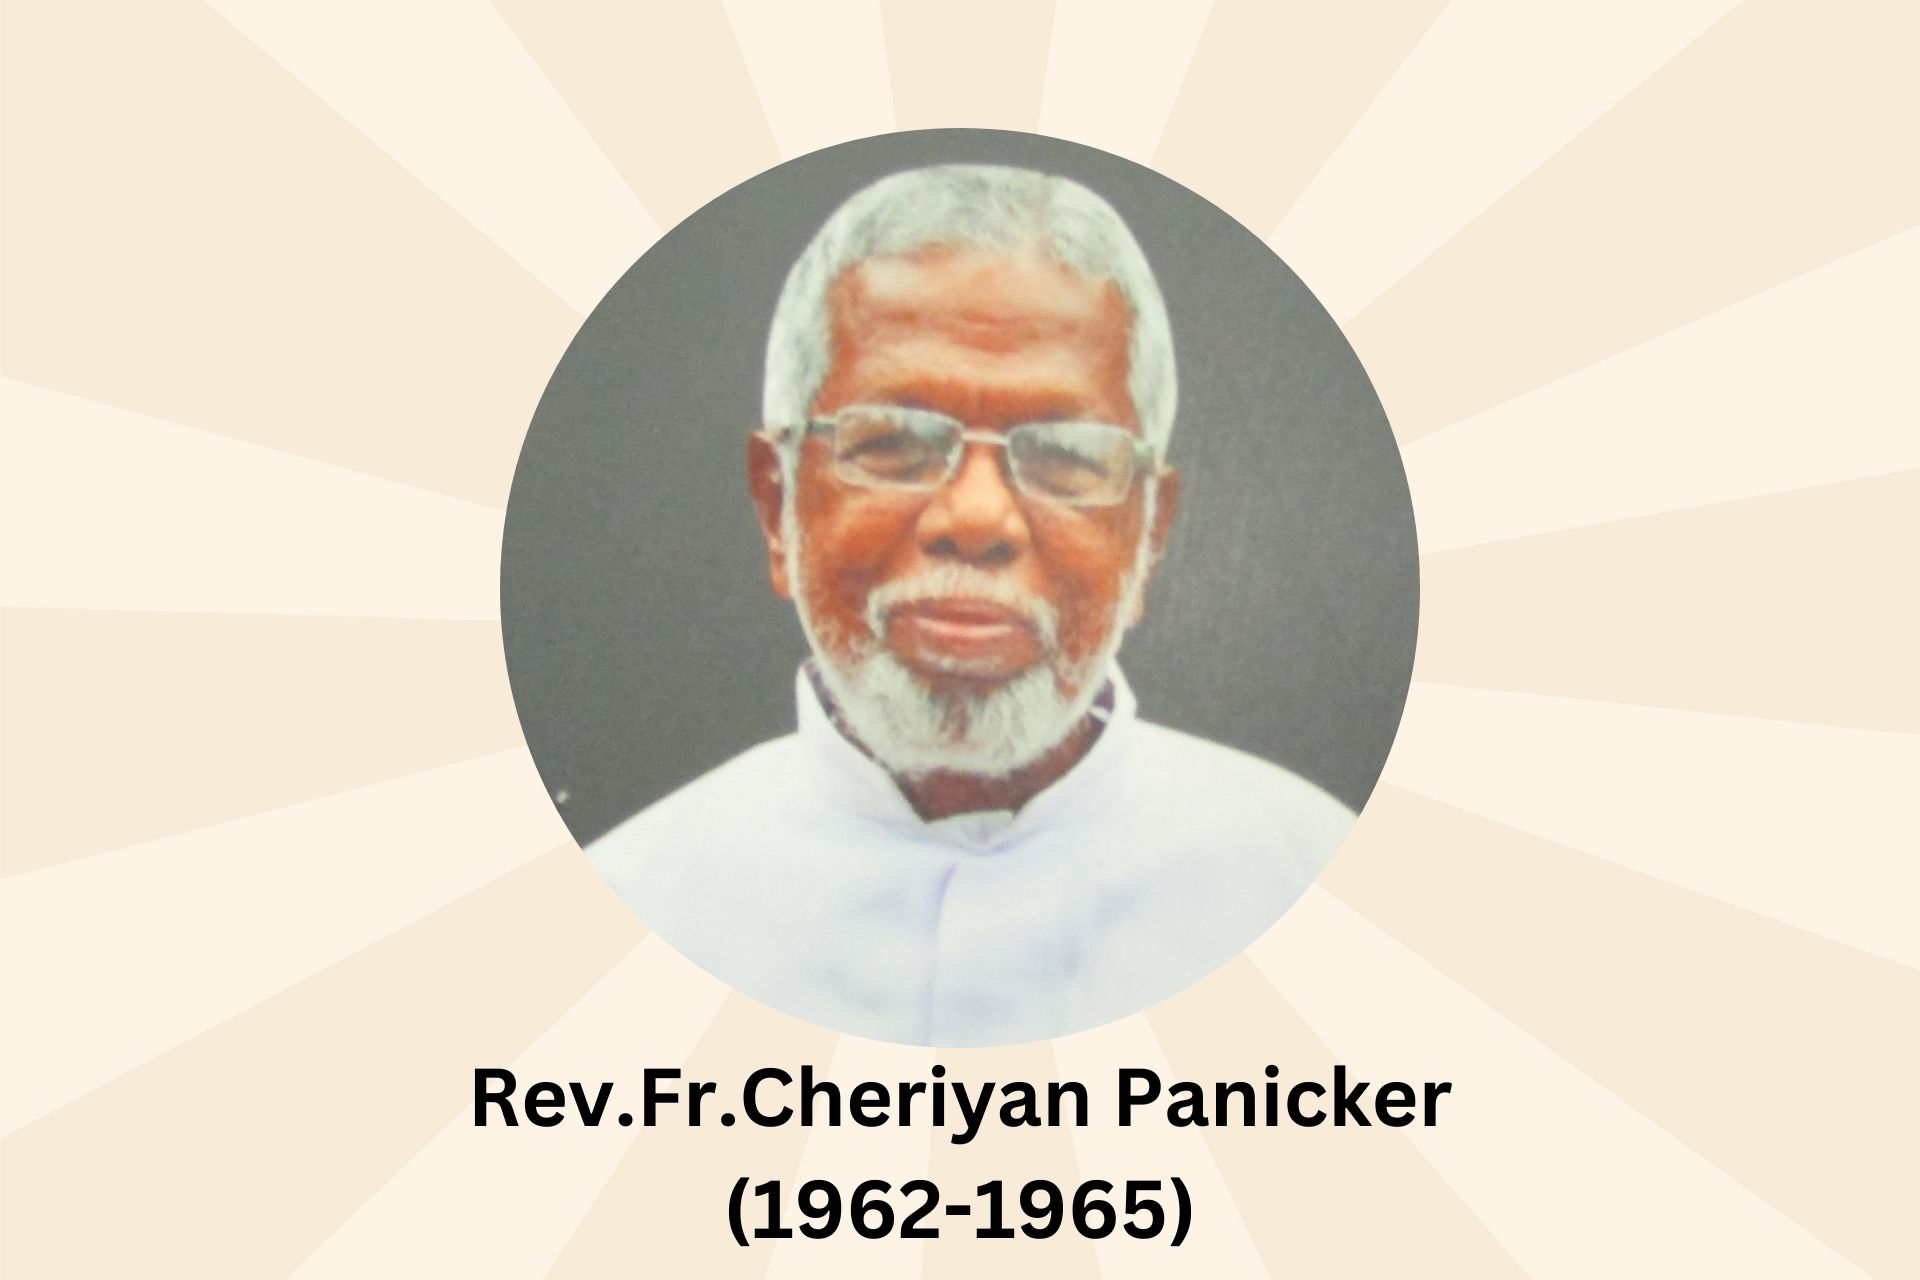 Rev.Fr.Cheriyan Panicker (1962-1965)